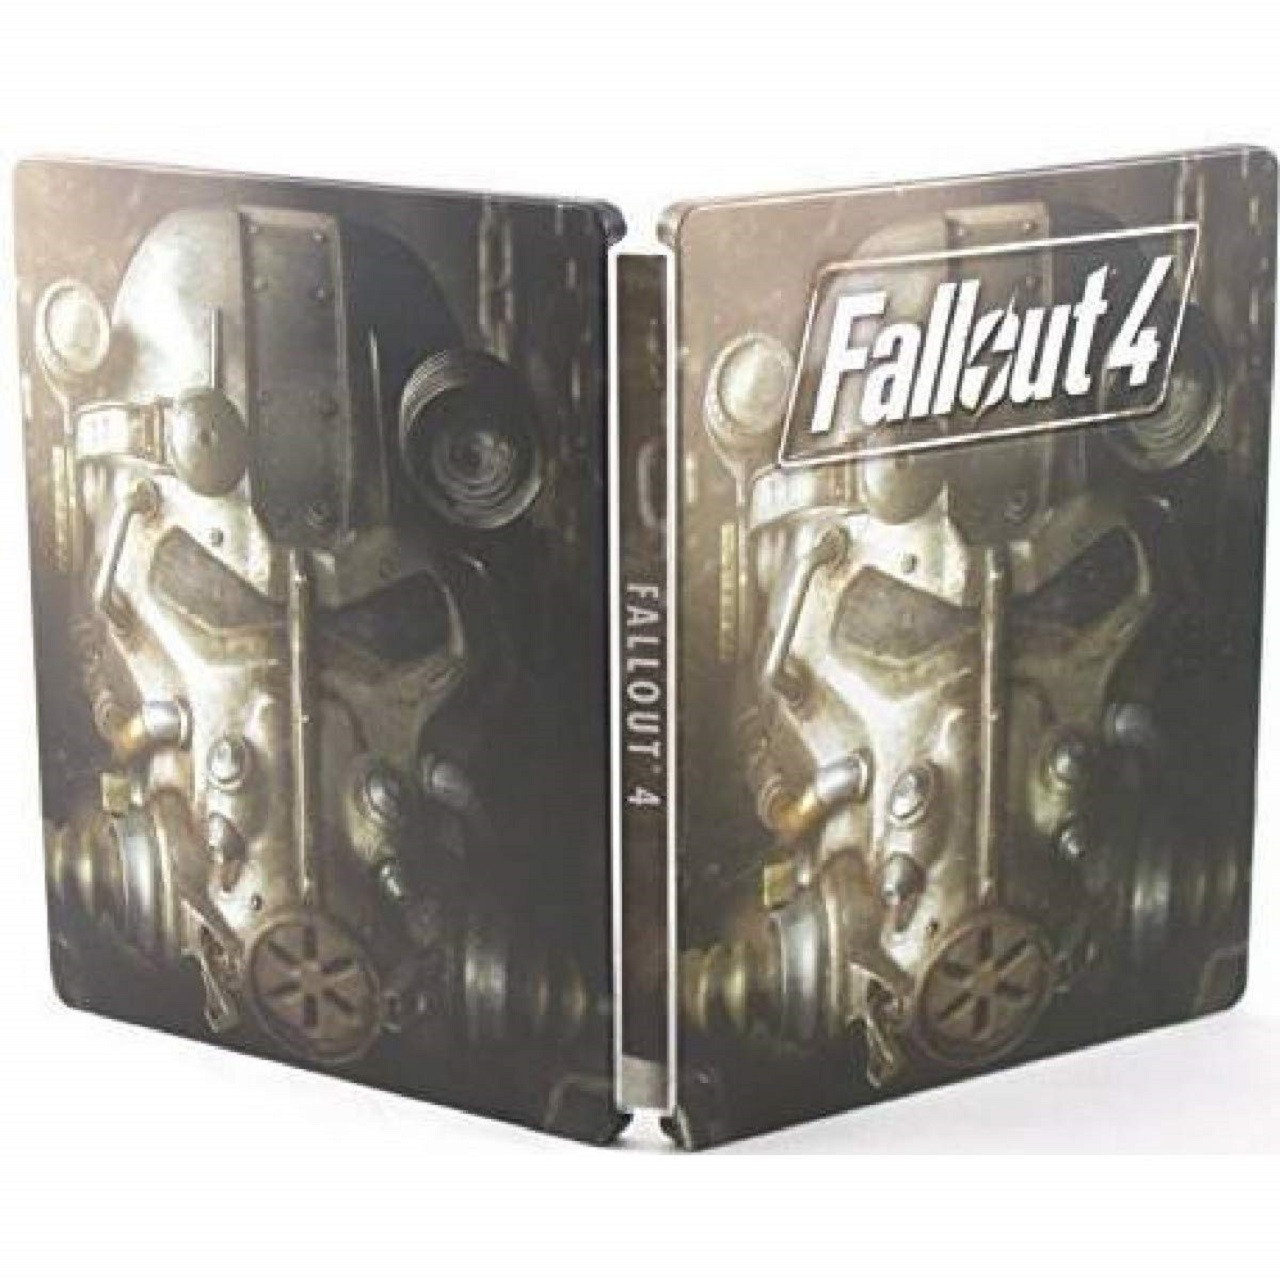 Steelbook (залізний кейс) Fallout 4 PS4/XBOX (БЕЗ ГРИ)